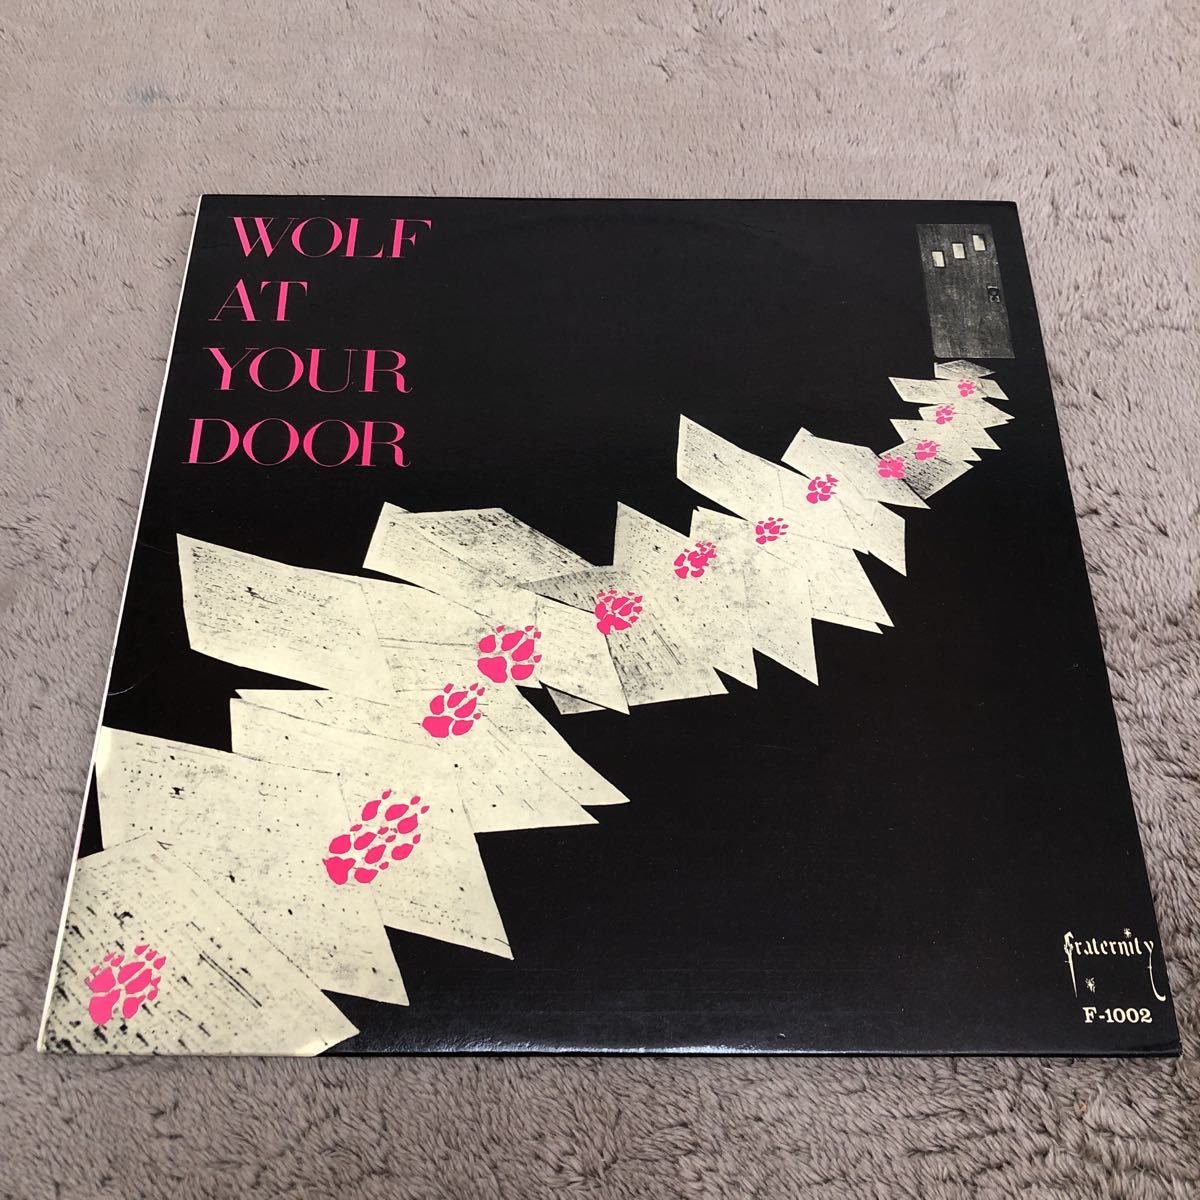 TOMMY WOLF　トミーウルフ / WOLF AT YOUR DOOR /【スペイン盤】LP レコード / MONO / HI-FIDELITY FSR-719 / 洋楽ジャズ /_画像1